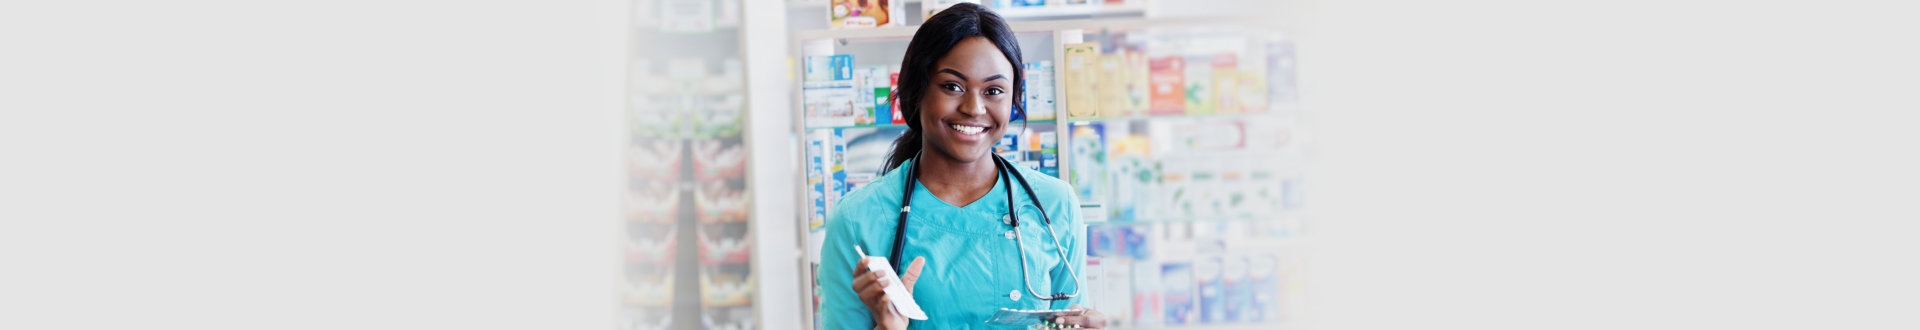 African american pharmacist working in pharmacy